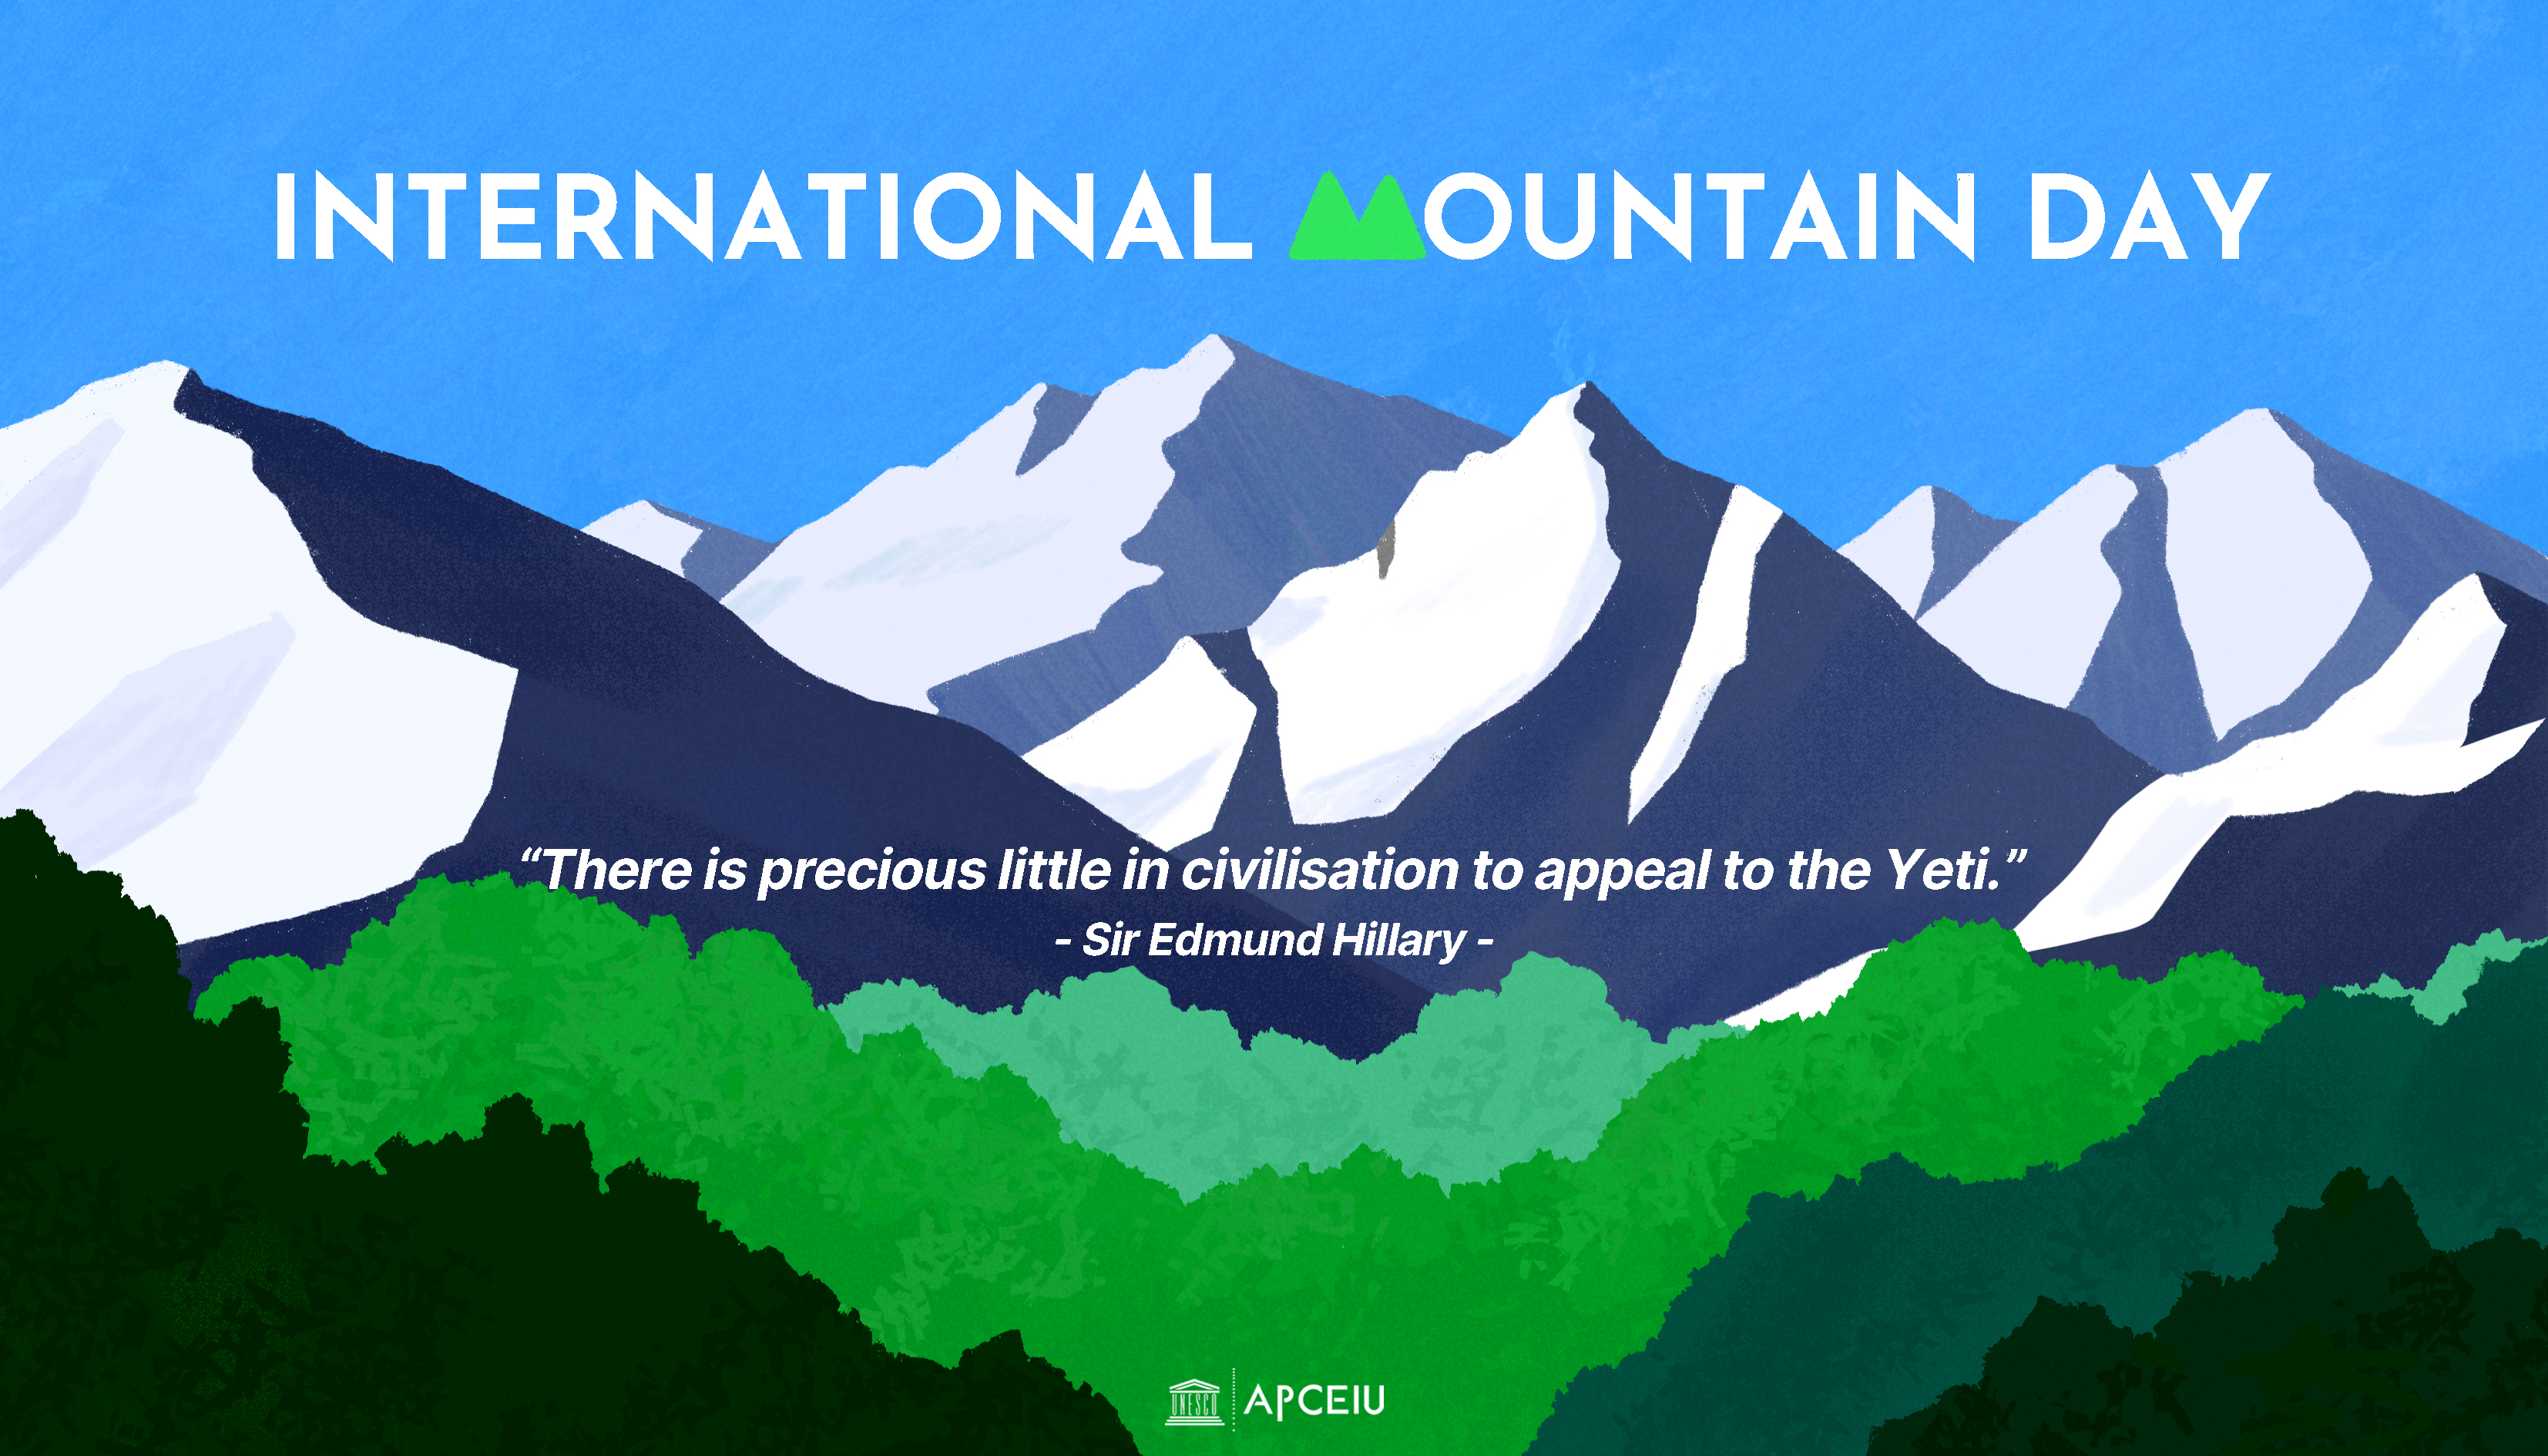 International Mountain Day Illustration.jpg